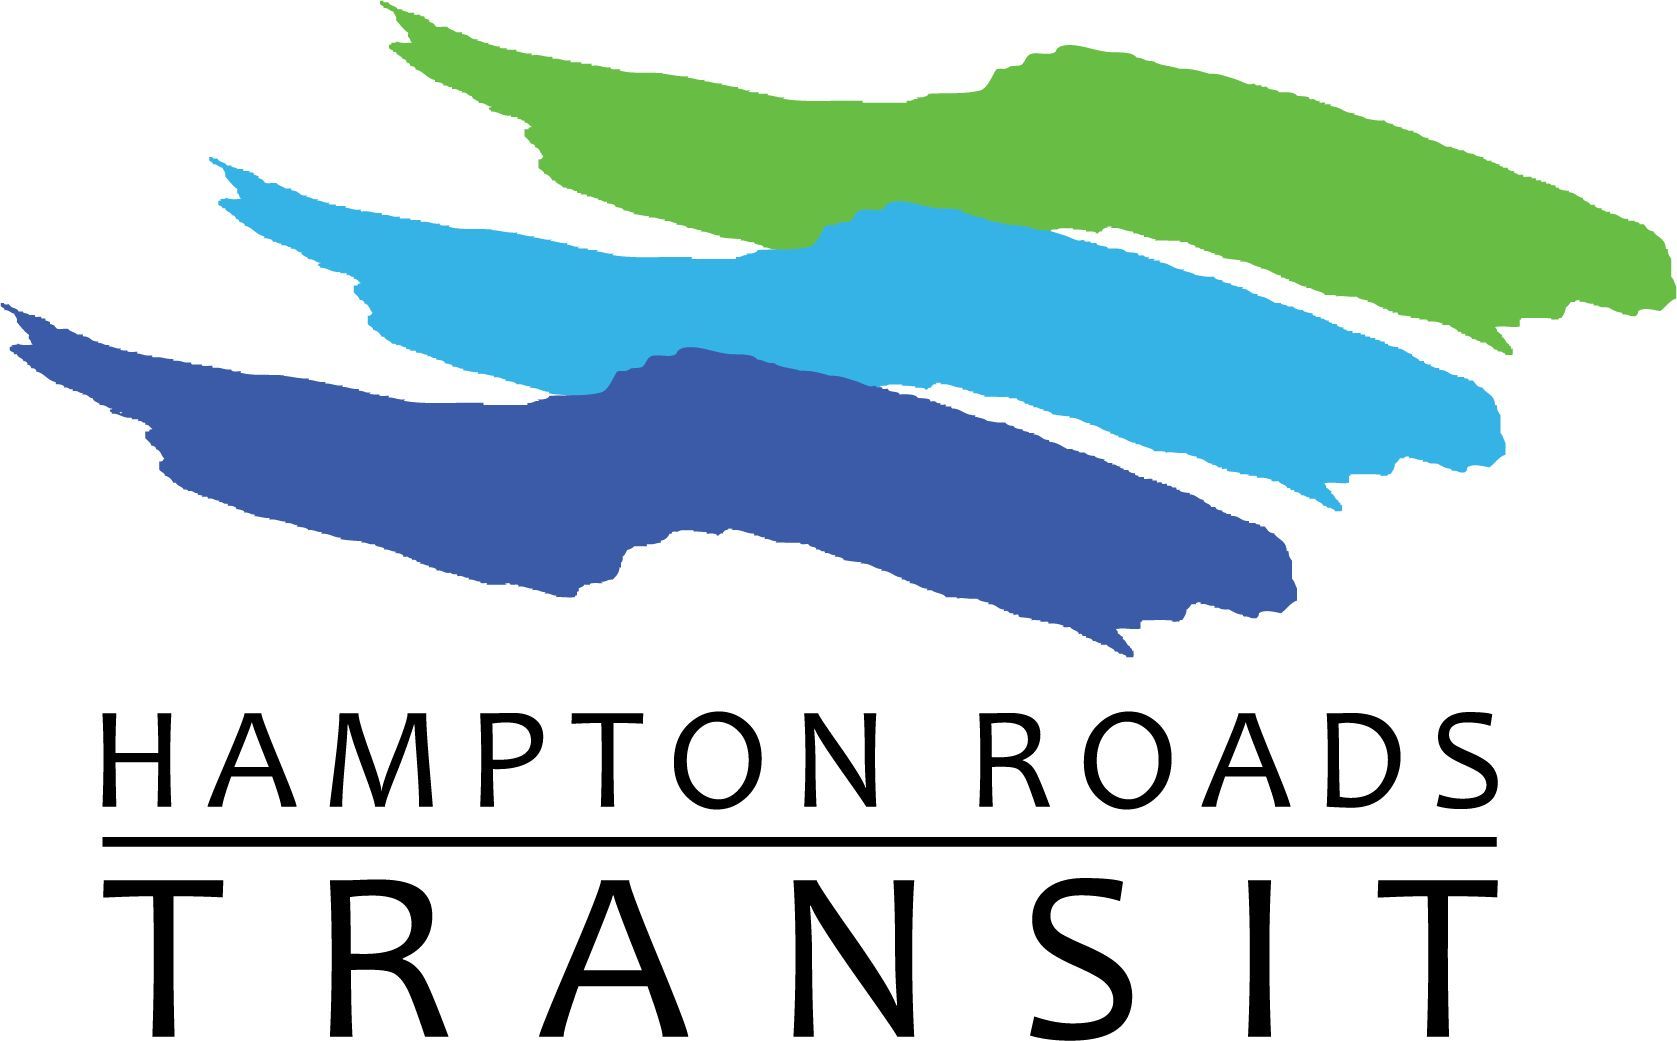 Hampton Roads Transit